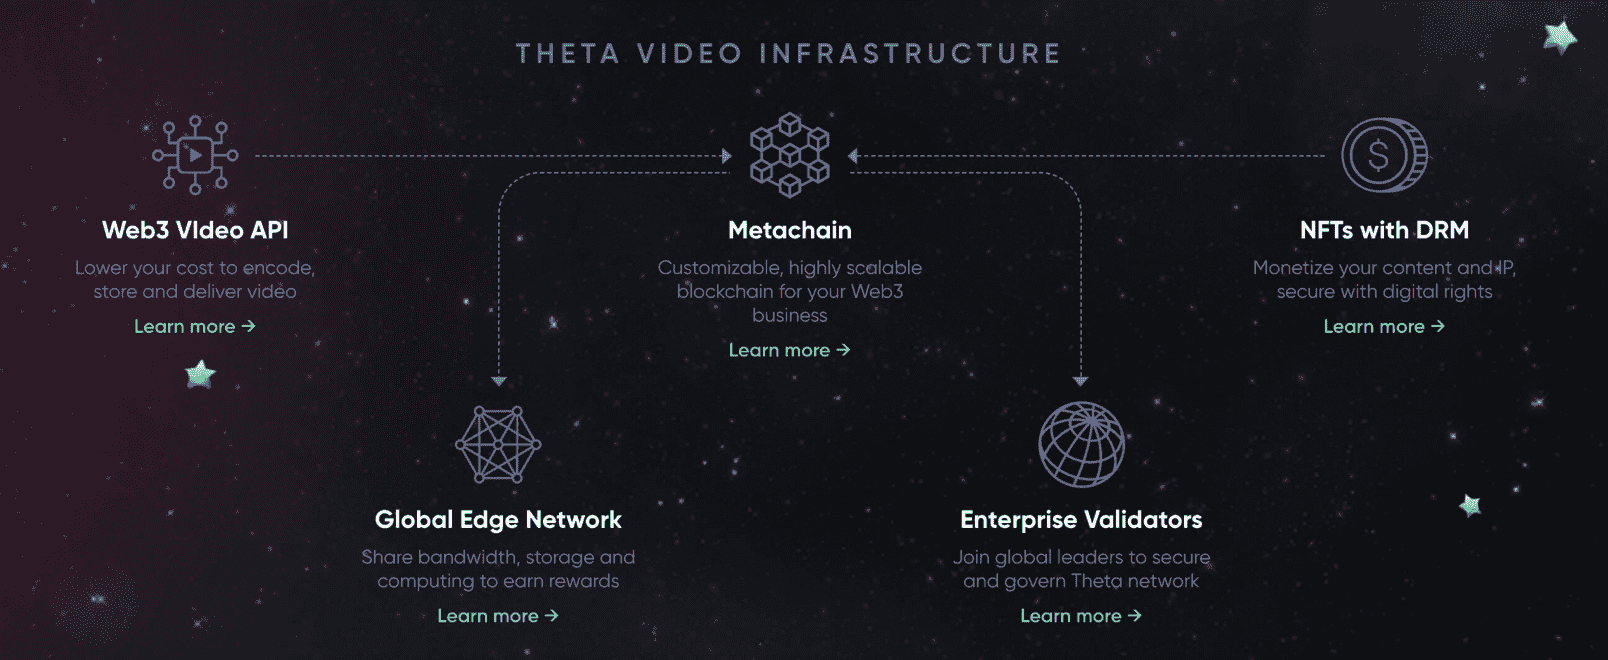 Theta video infrastructure